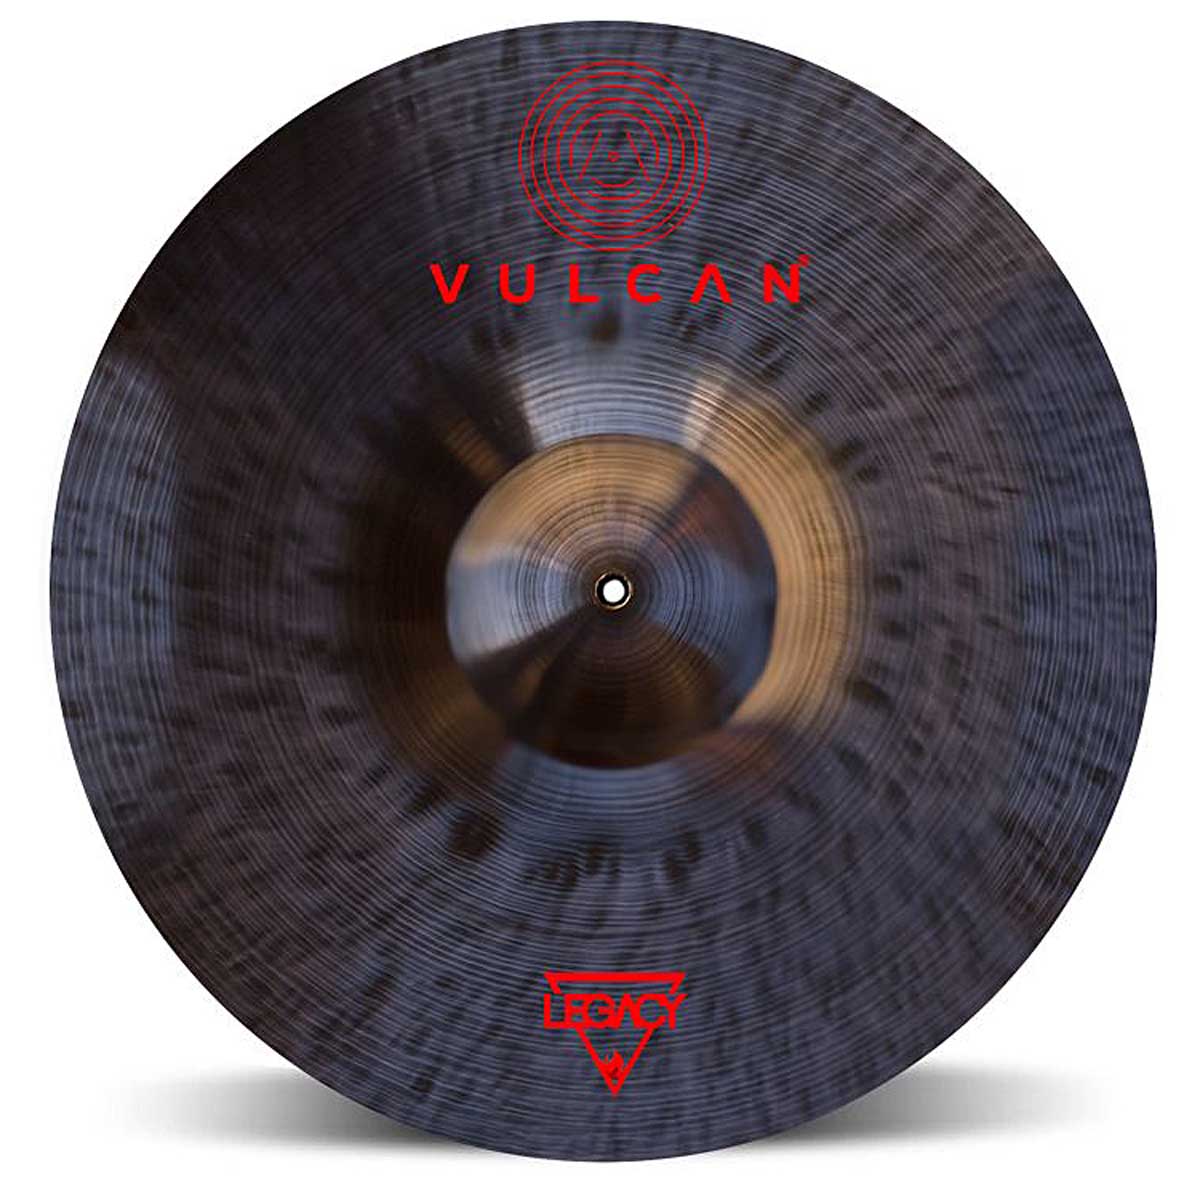 Vulcan piatto Legacy